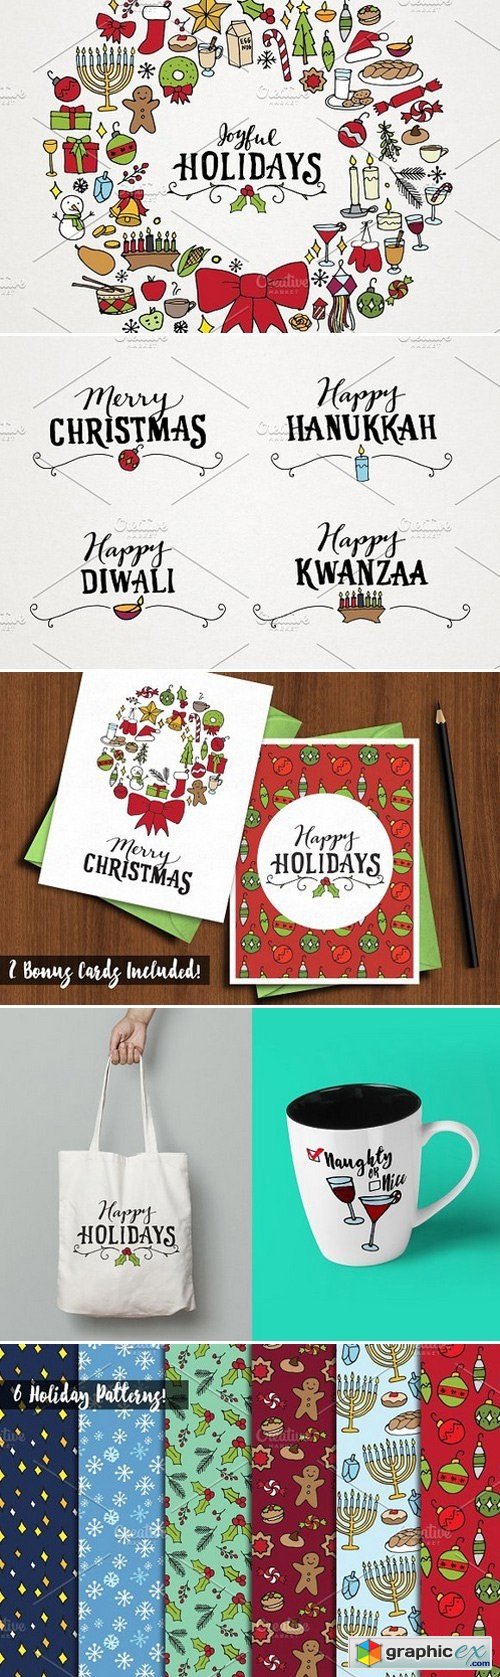 Holiday & Christmas Art Pack